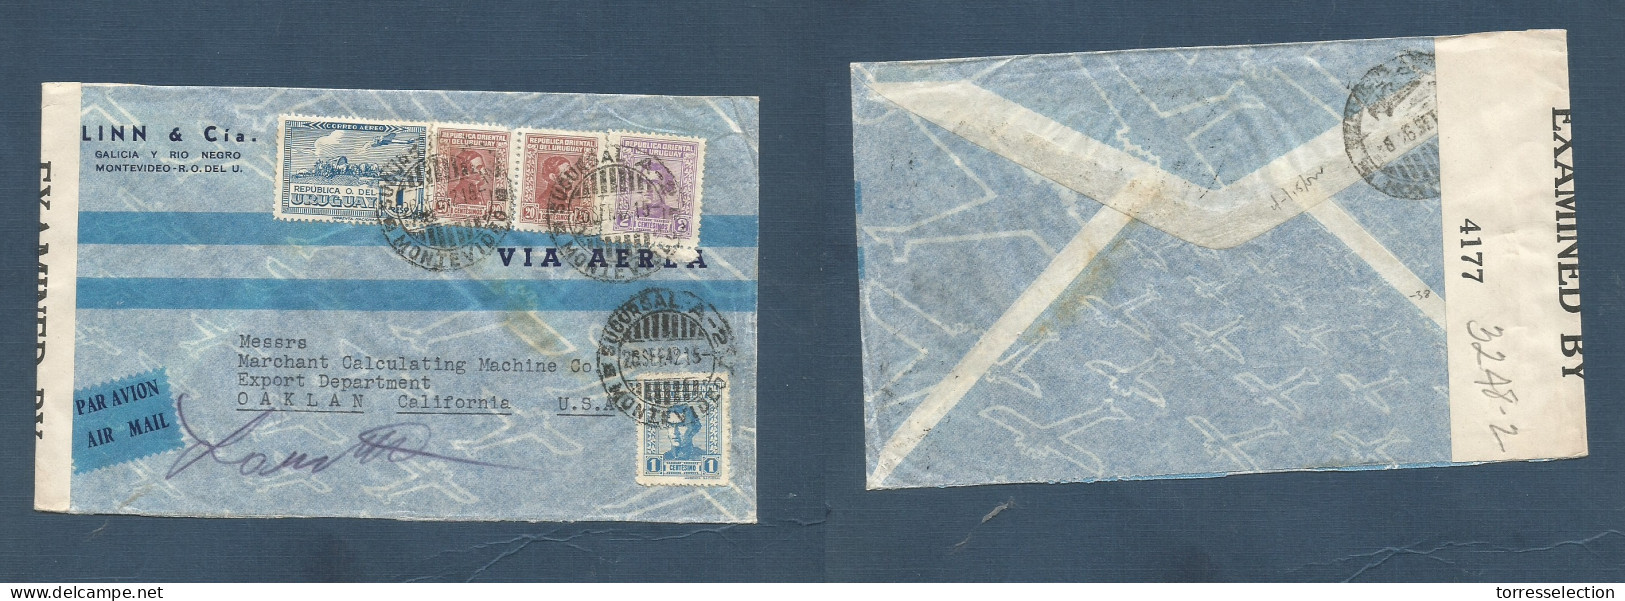 URUGUAY. 1942 (26 Sept) Montevideo - USA, CA, Oakland. Air WWII Censored Multifkd Envelope. Nice Usage. XSALE. - Uruguay